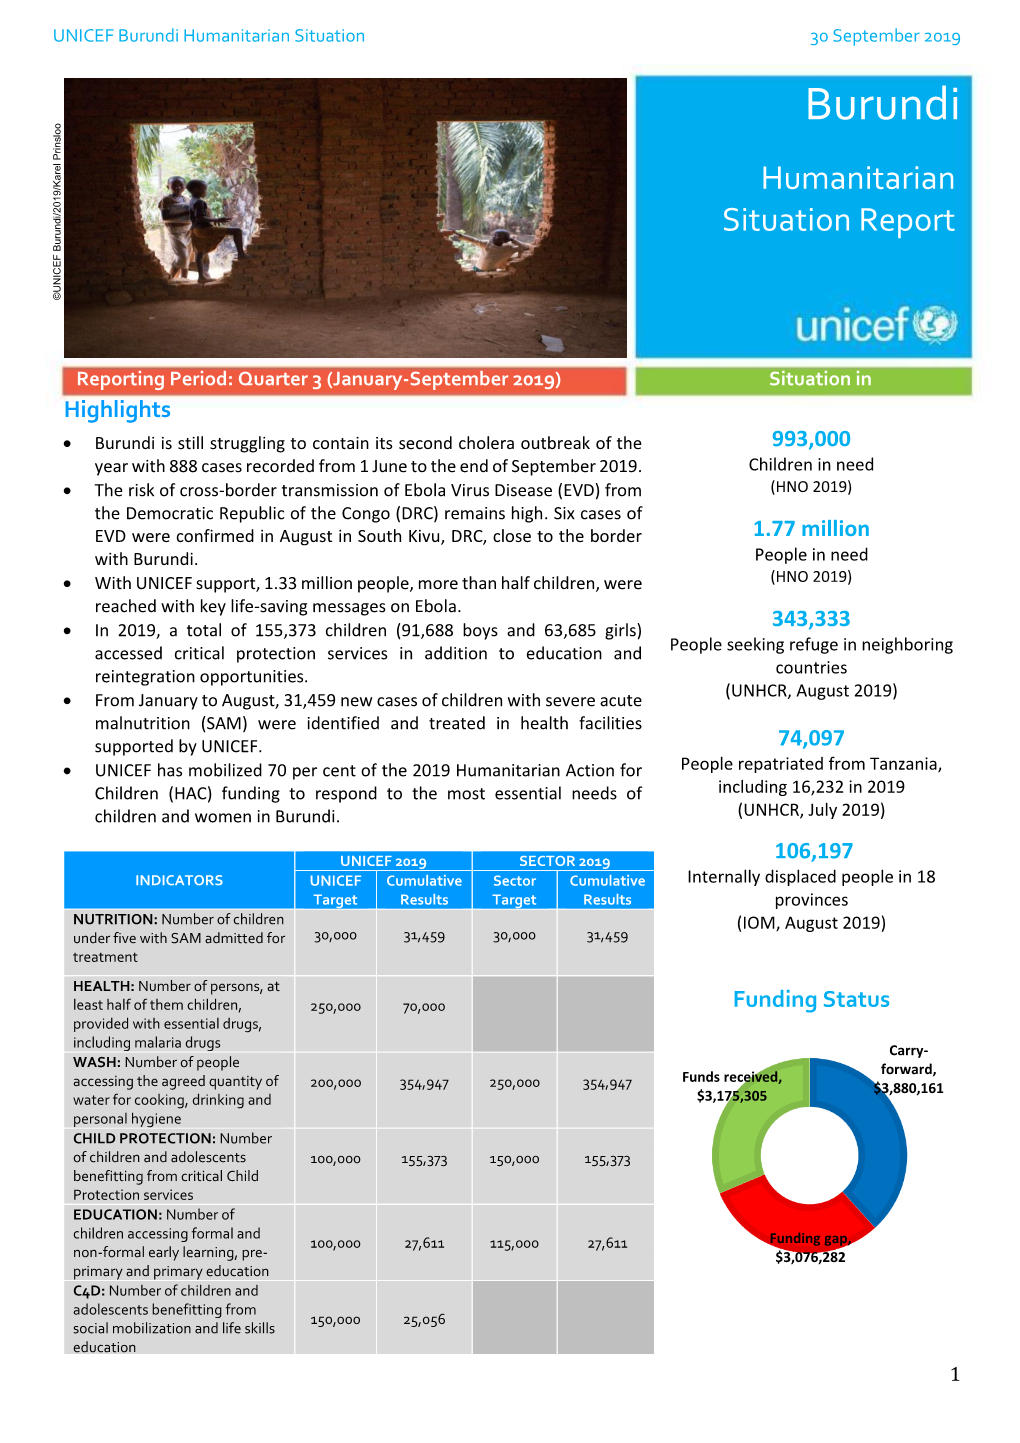 UNICEF Burundi Humanitarian Situation Report Q3